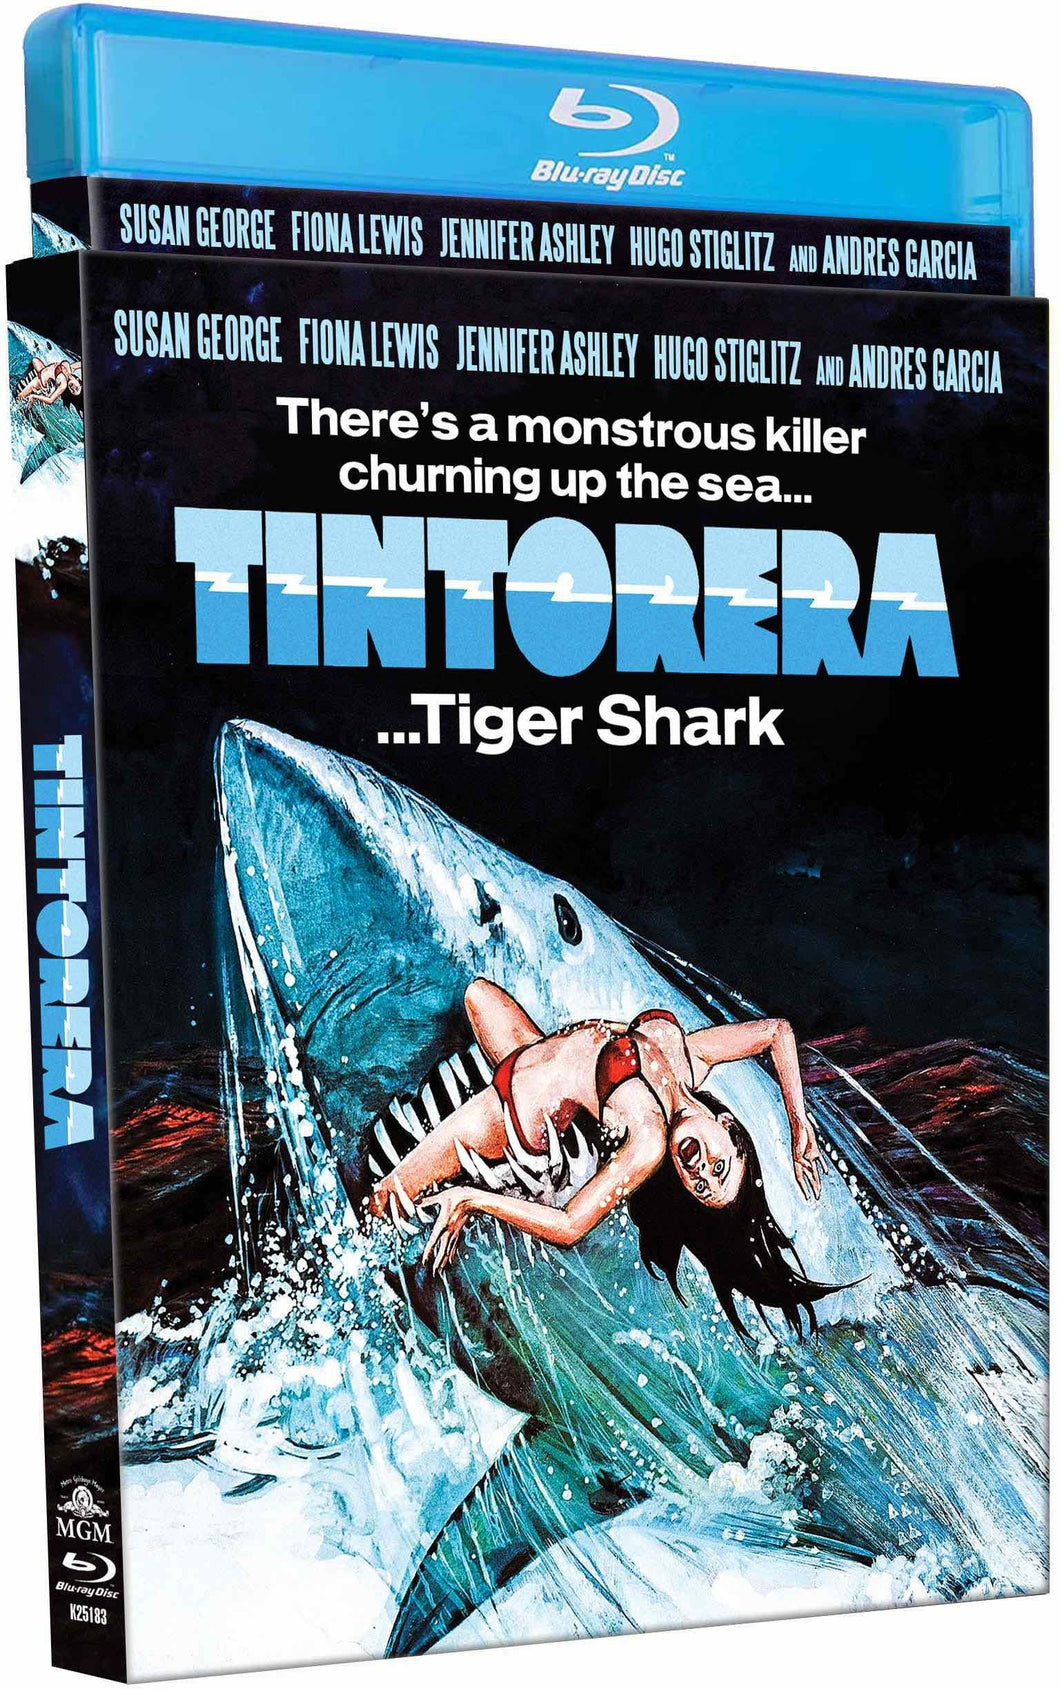 Tintorera ... Tiger Shark (Blu-ray): Ronin Flix